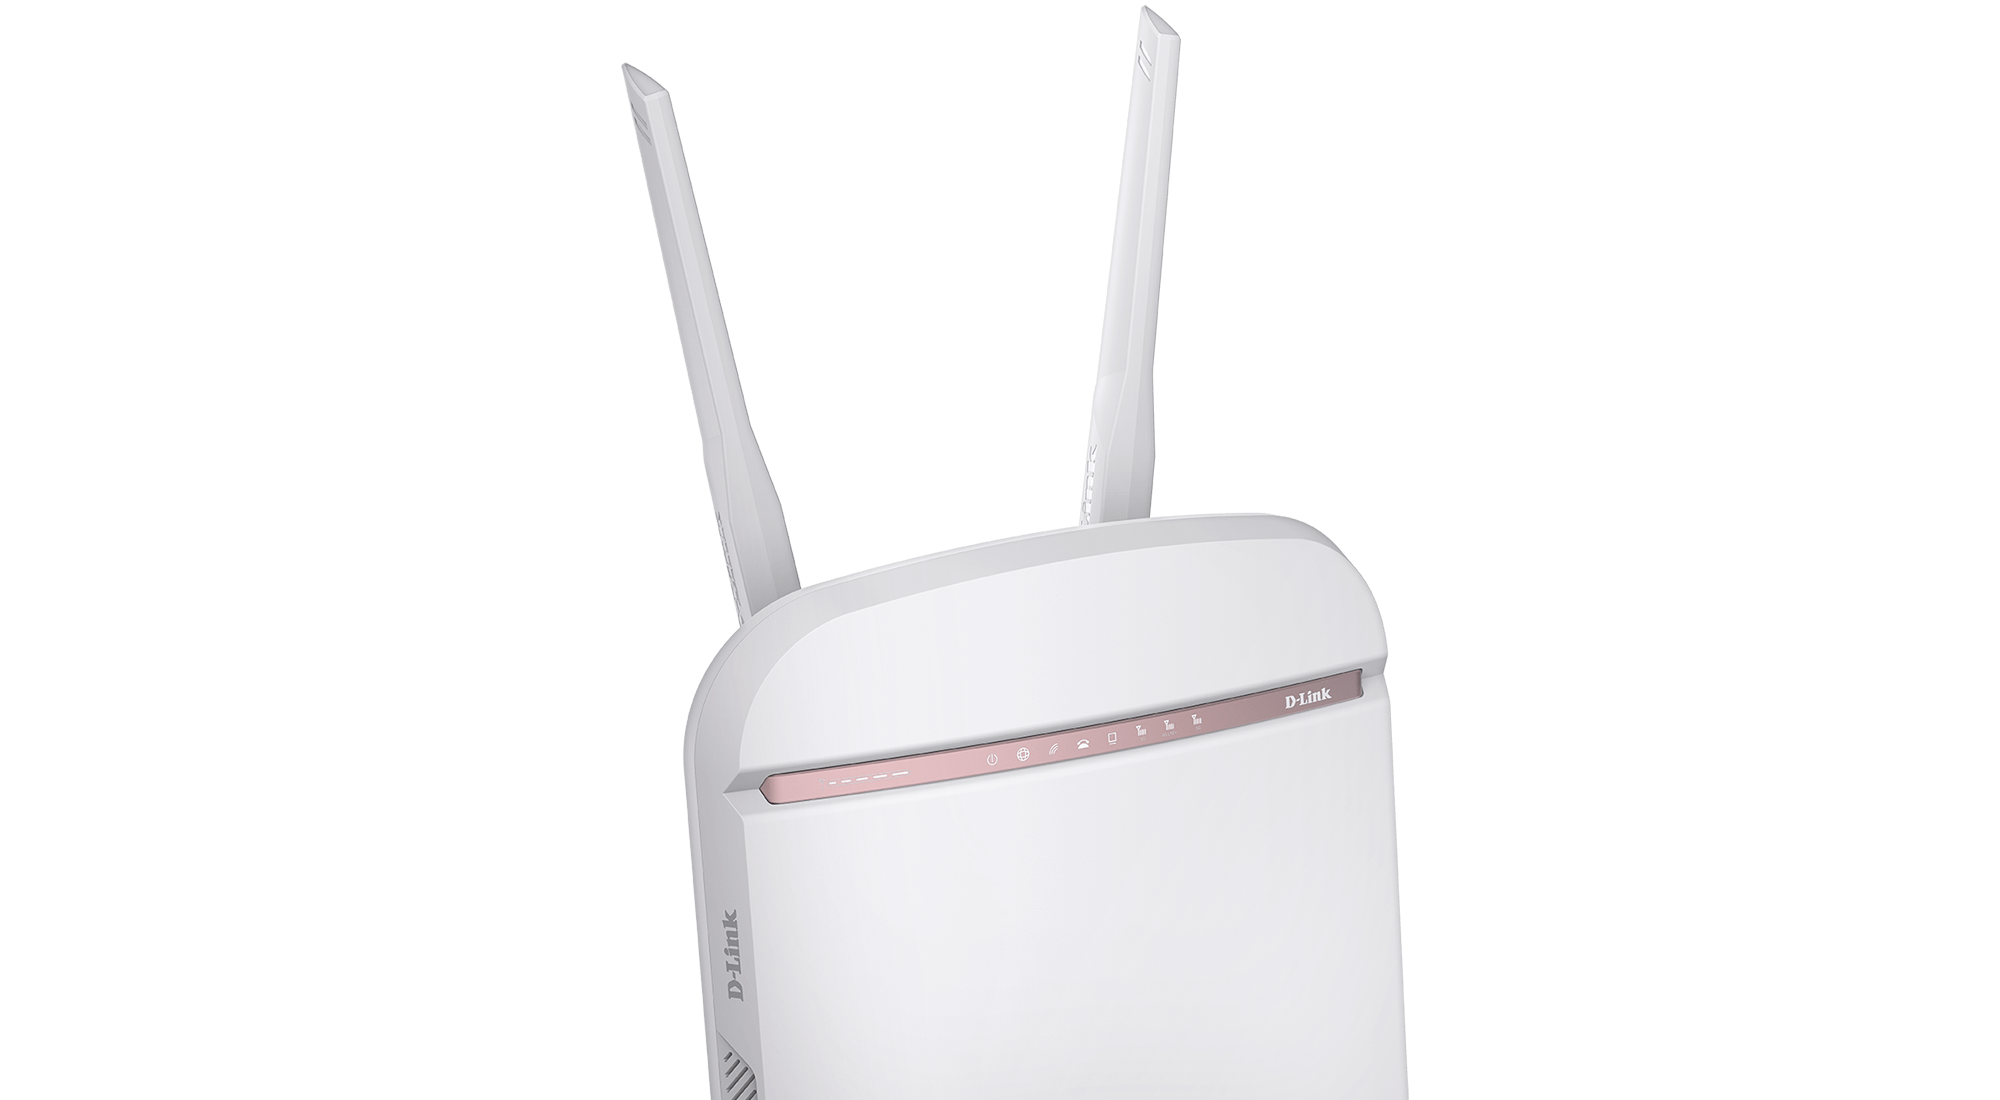 DWR-978 5G AC2600 Wi-Fi Router